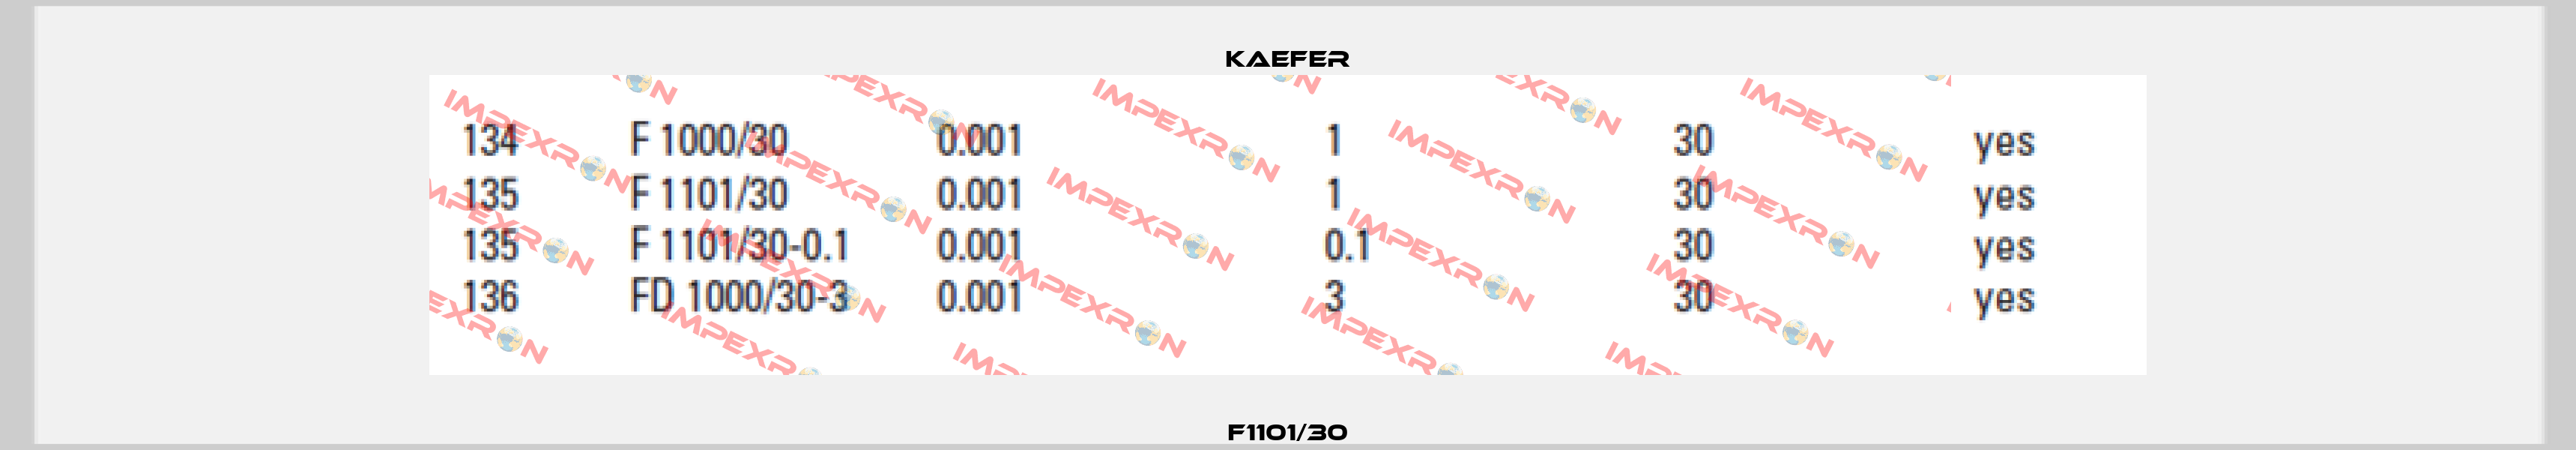 F1101/30 Kaefer